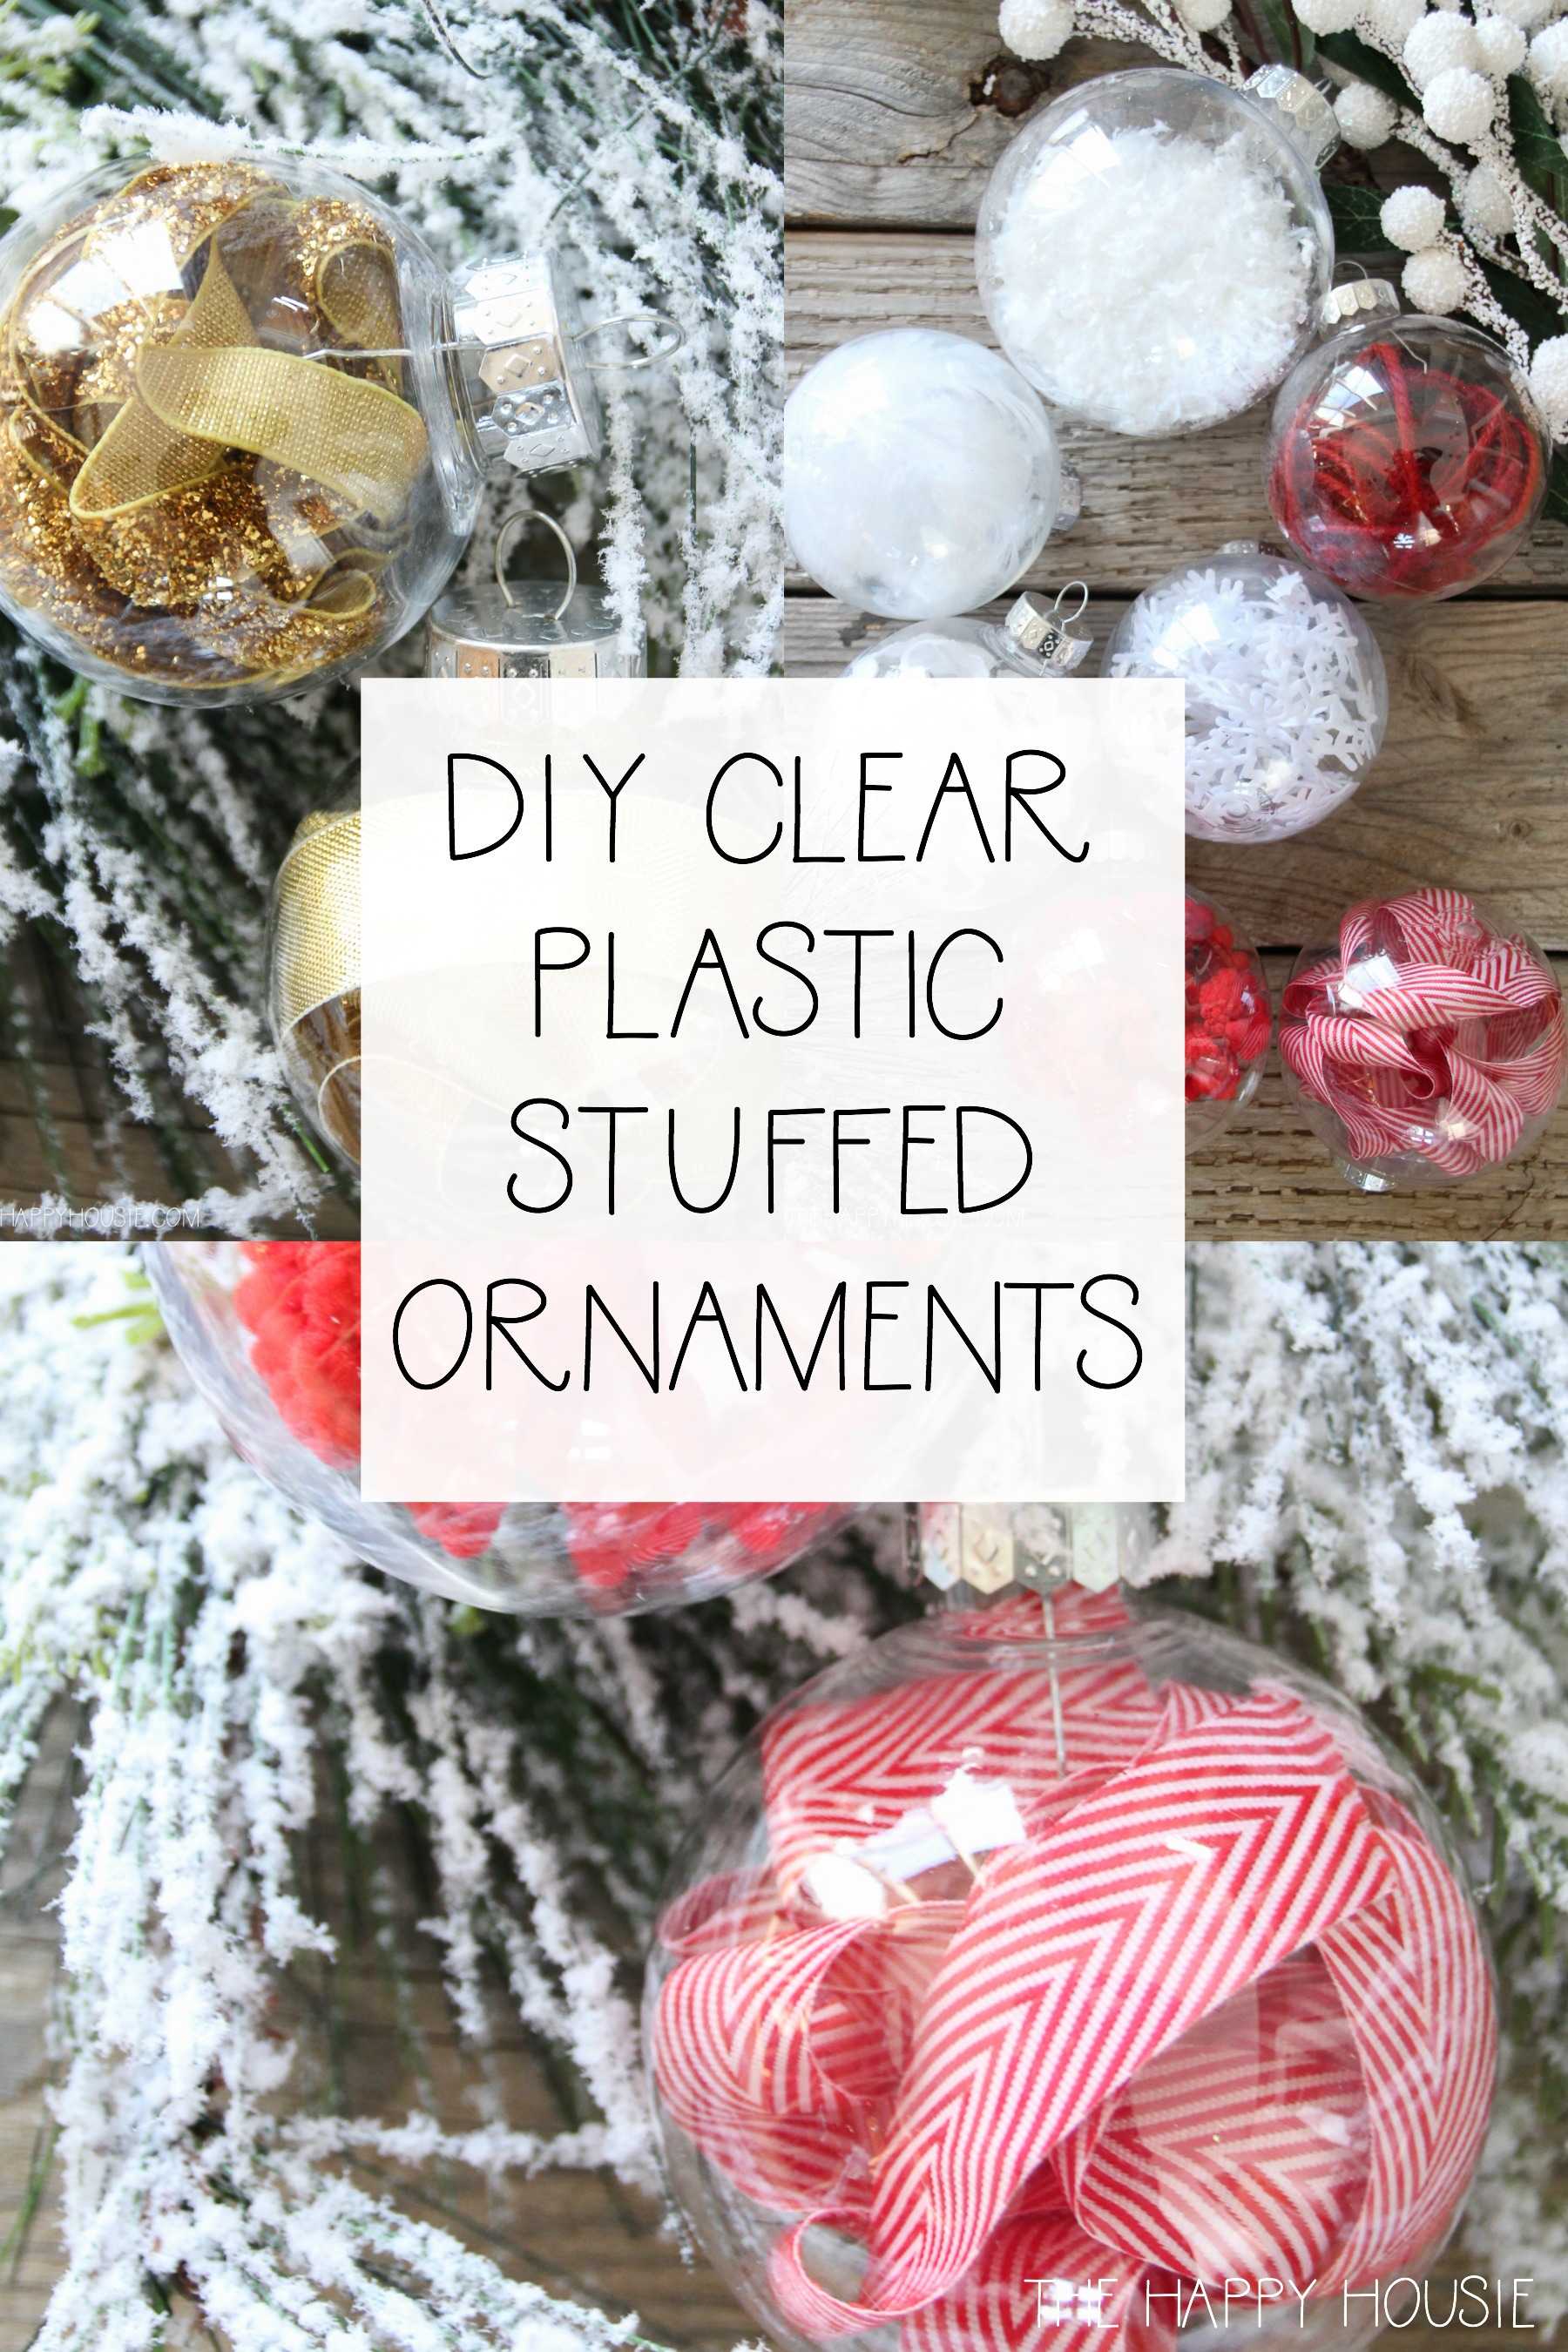 DIY clear plastic stuffed ornaments poster.